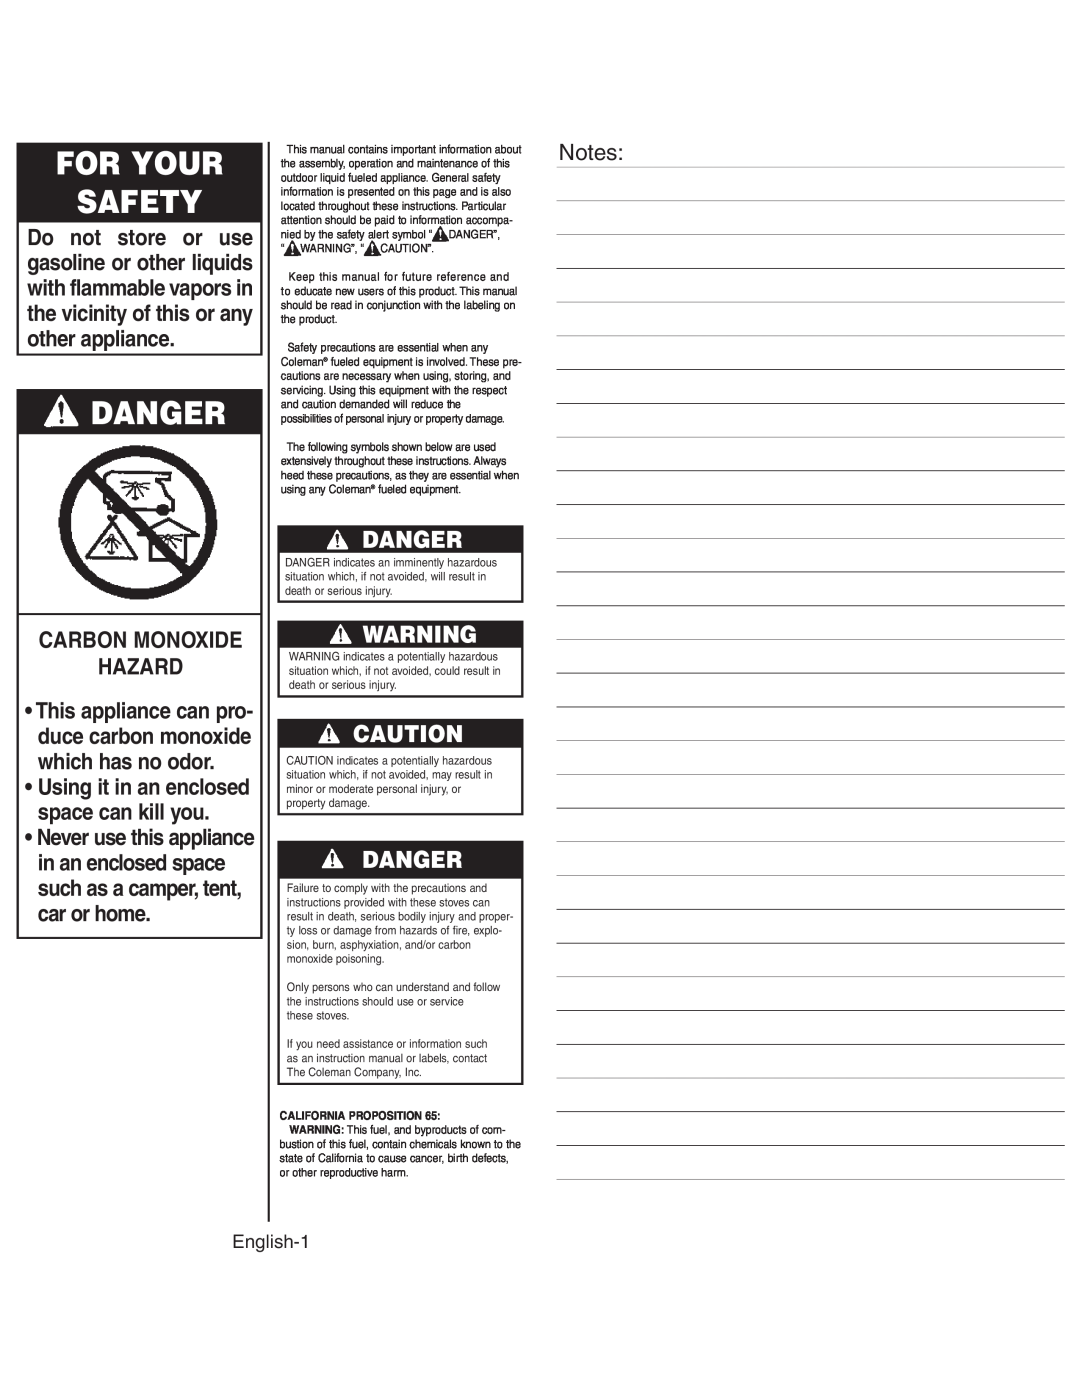 Coleman 425G instruction manual For Your Safety, Danger, Carbon Monoxide Hazard, English-1, California Proposition 